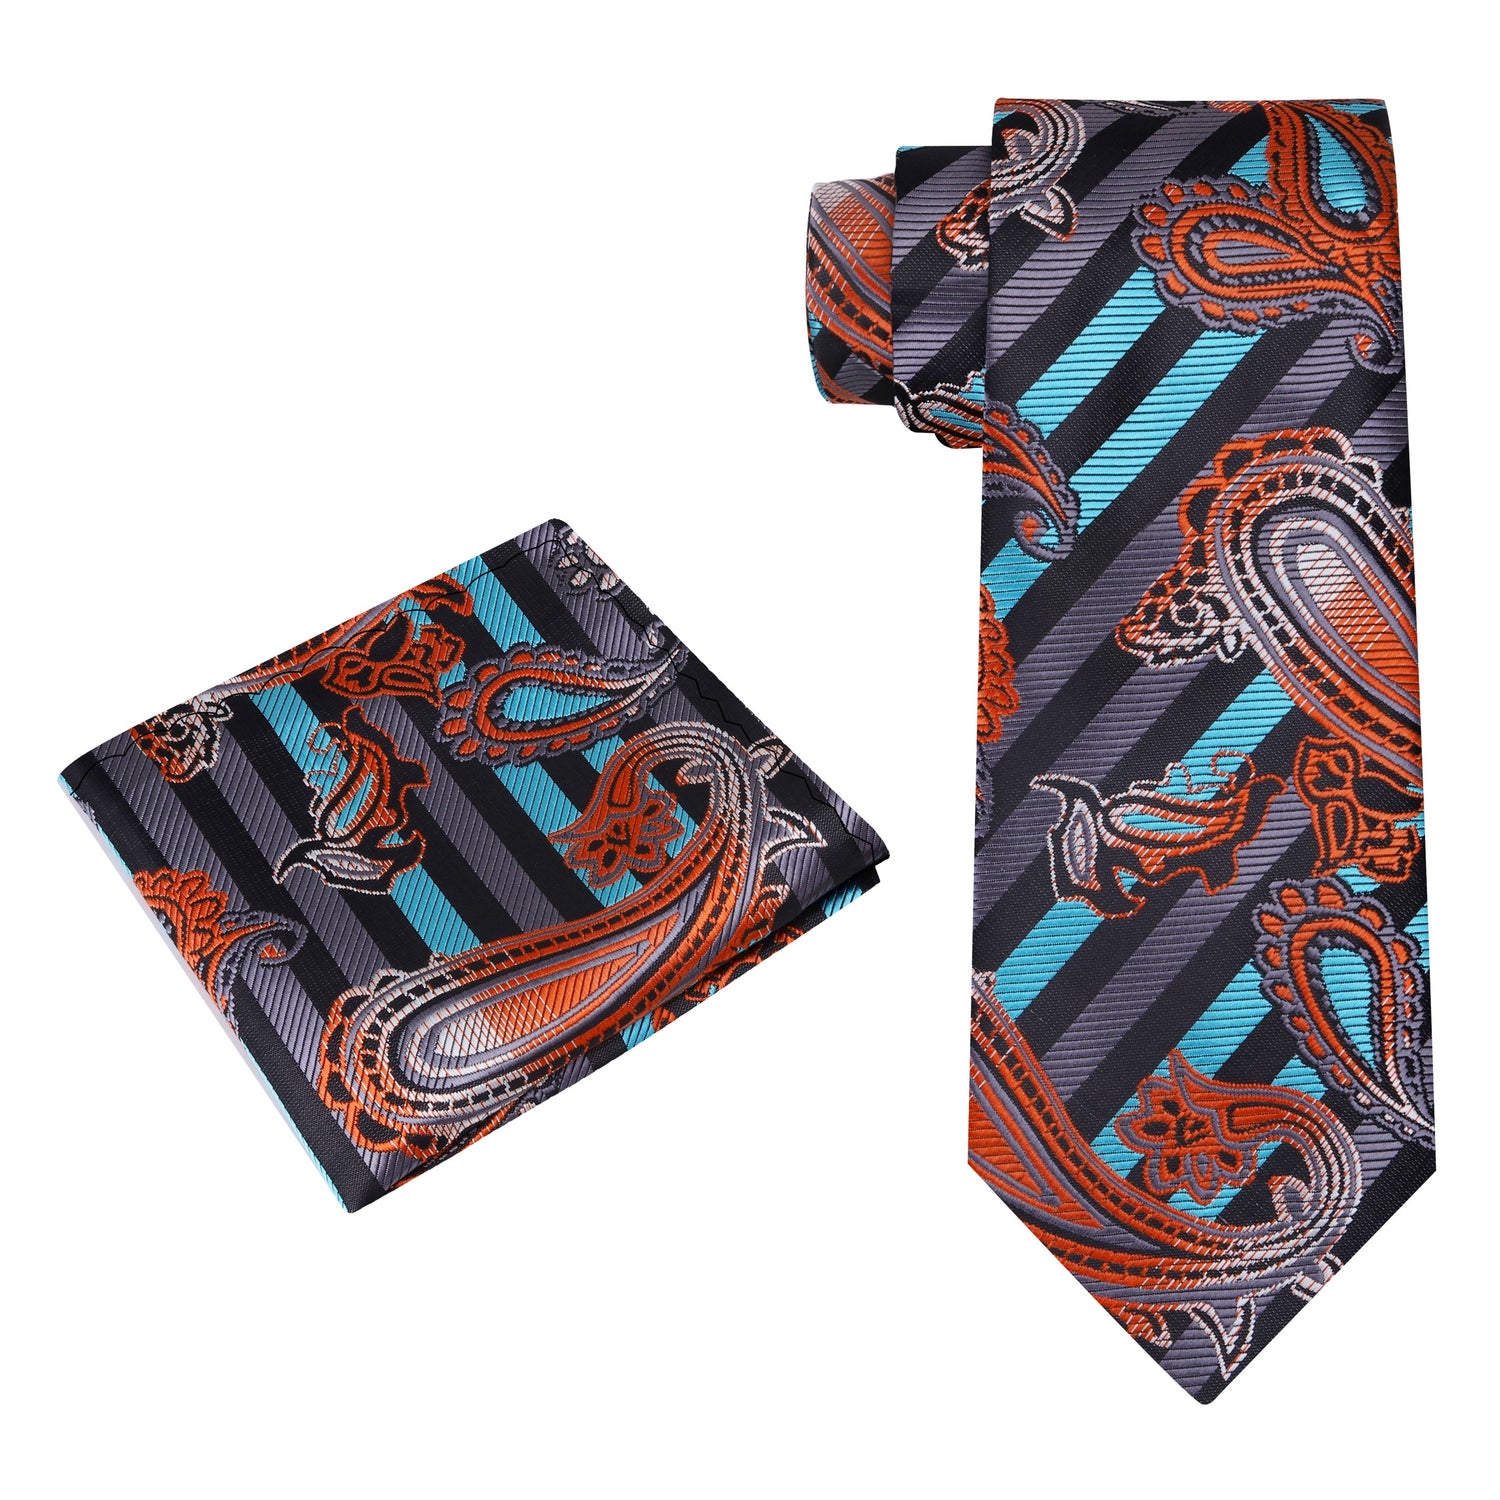 Alt View: An Aqua, Orange, Black Stripe with Paisley Pattern Silk Necktie, Matching Pocket Square